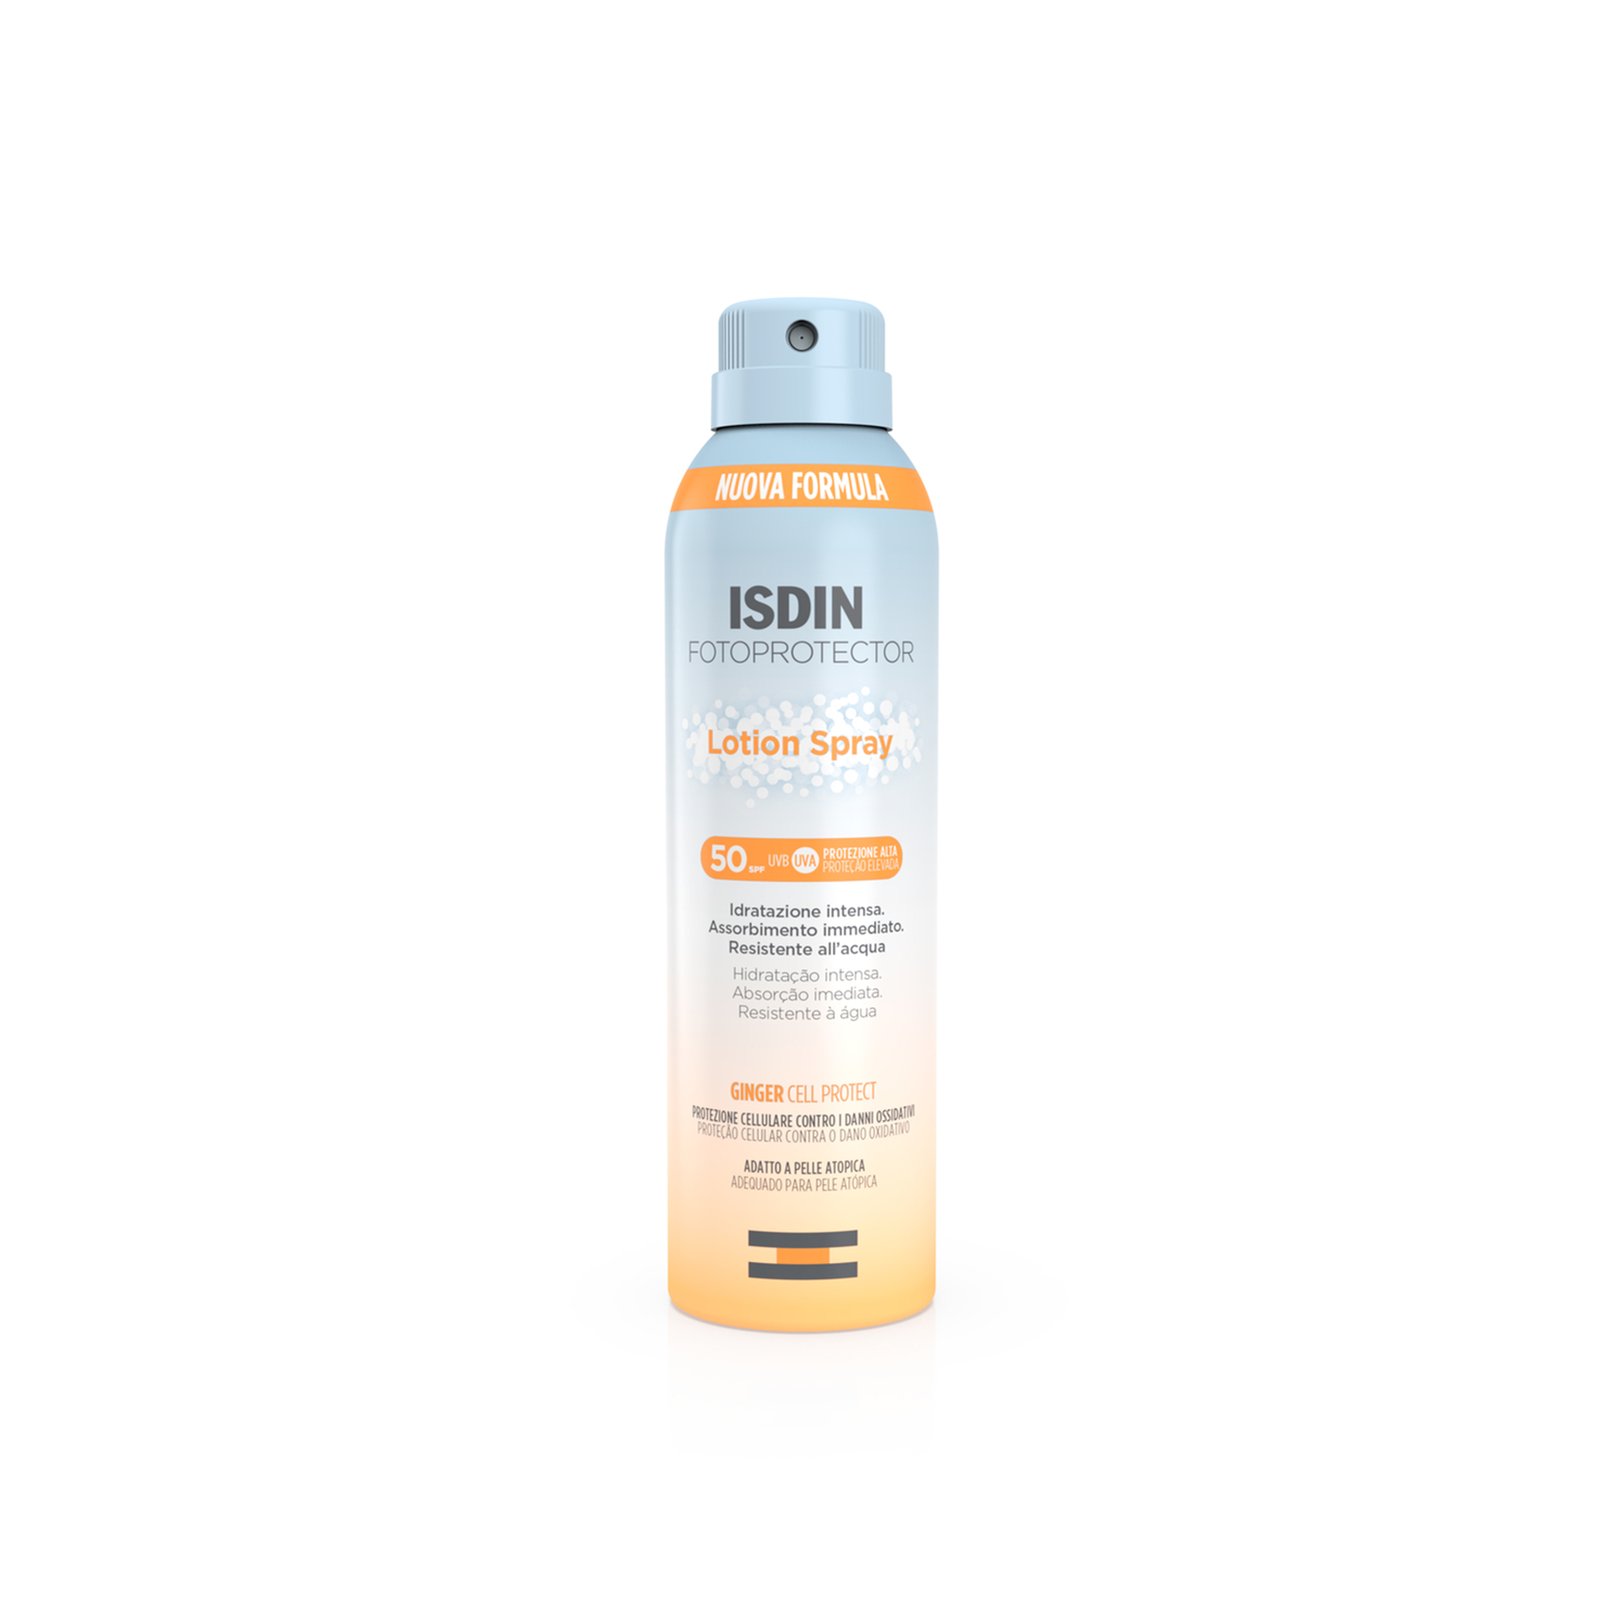 ISDIN Fotoprotector Lotion Spray SPF50 250ml (8.45fl oz)